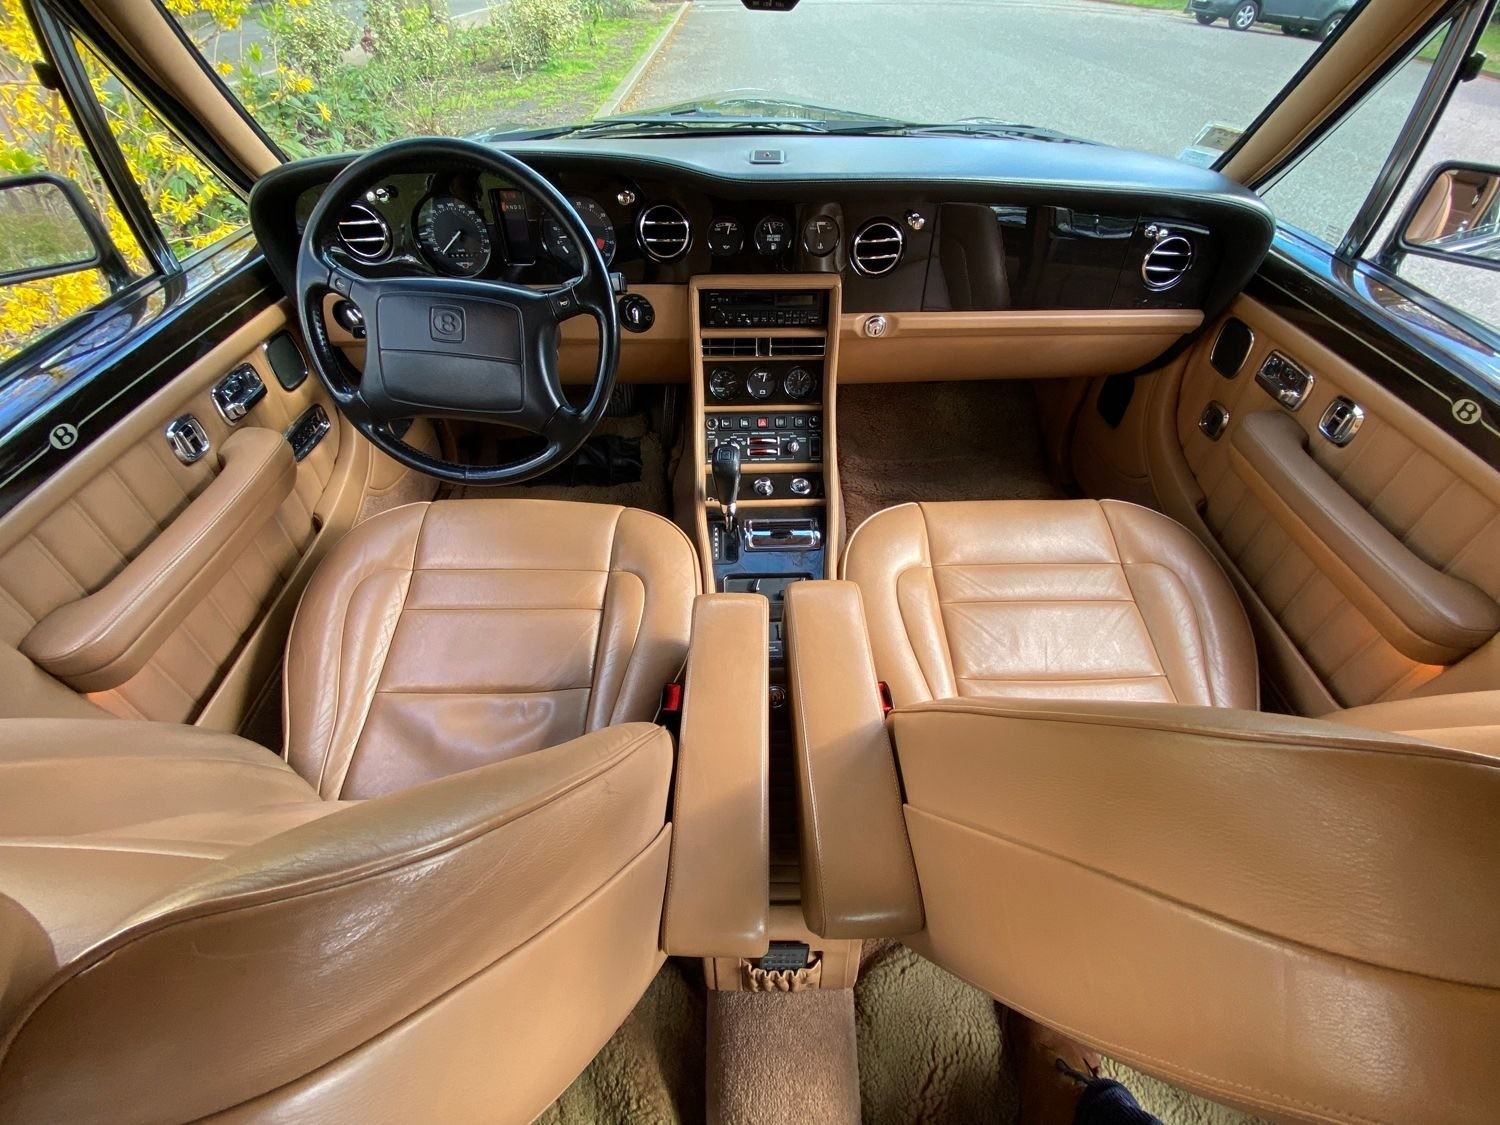 Bentley turbo ioj8cokujsk57ri2he5ku